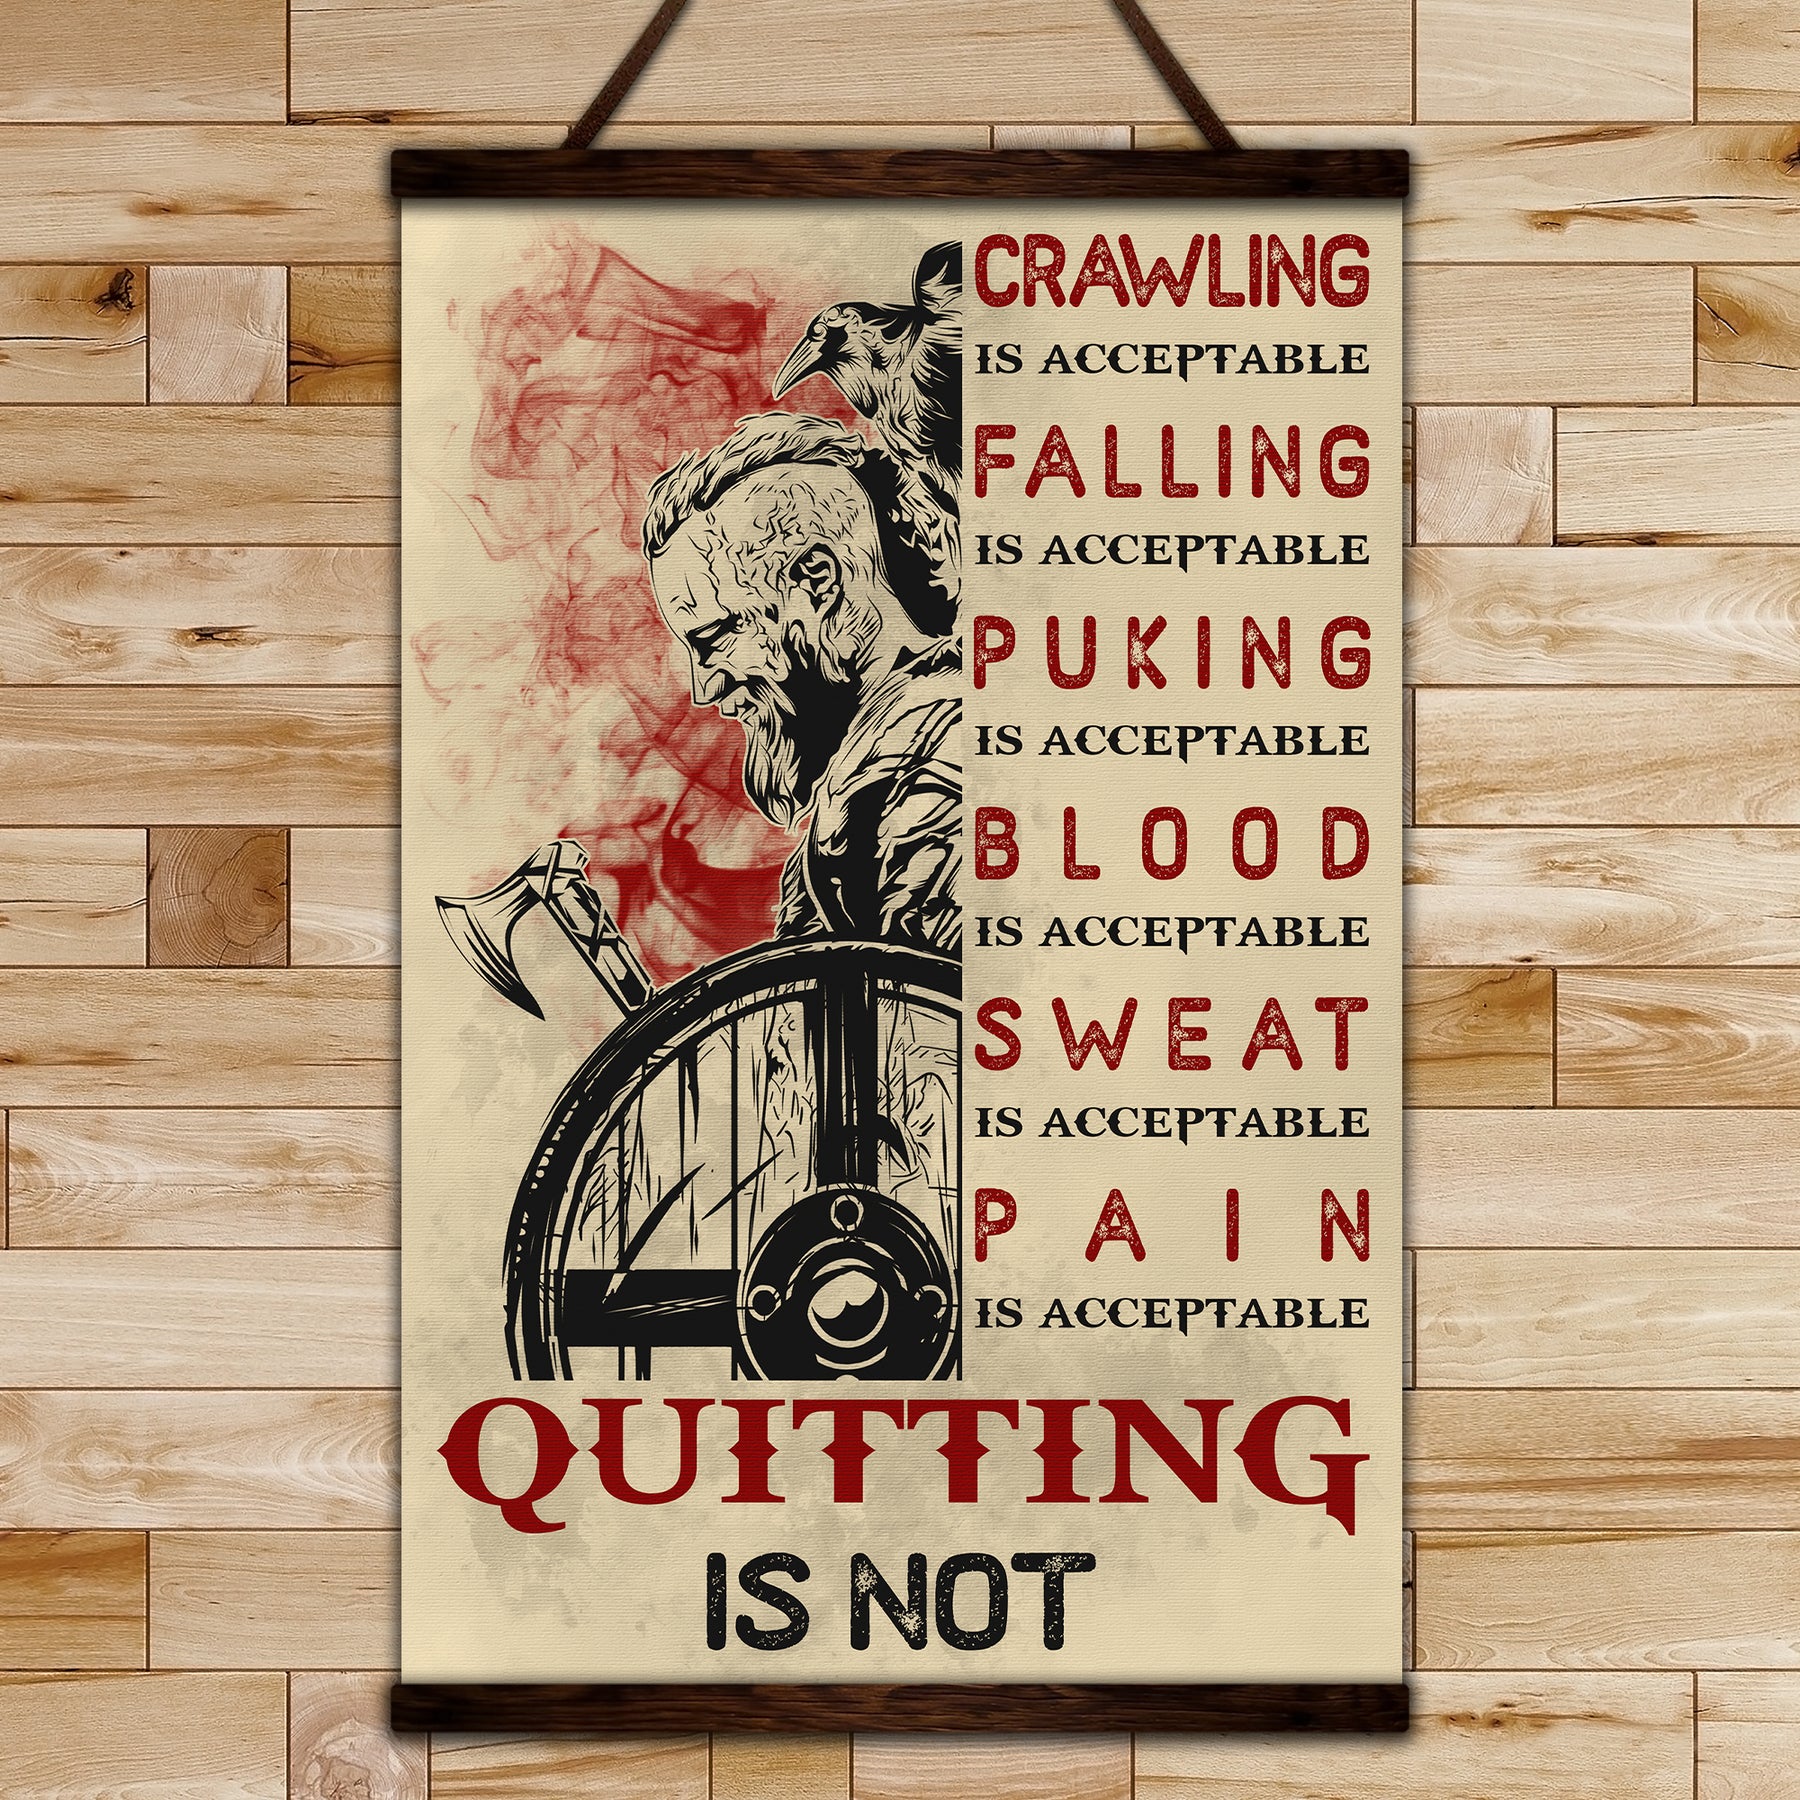 VK047 - Viking Poster - Quitting Is Not - Ragnar - Vertical Poster - Vertical Canvas